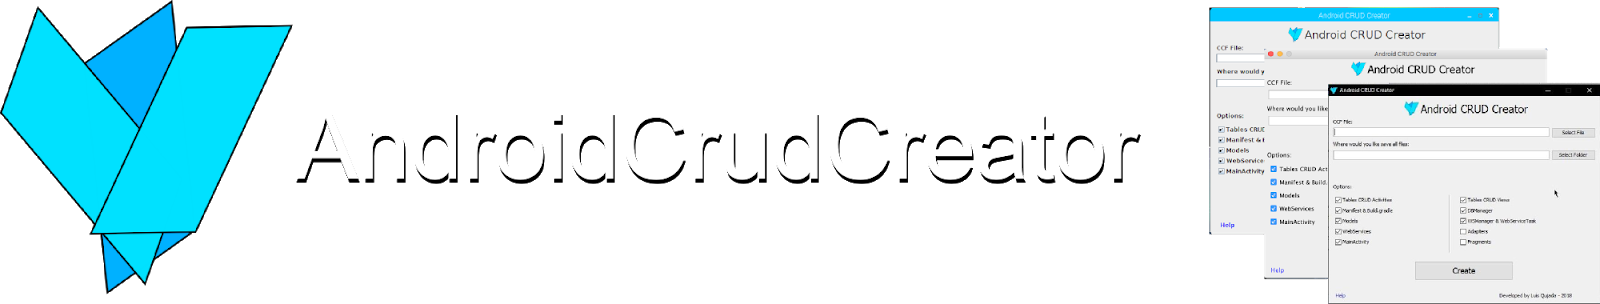 AndroidCrudCreator